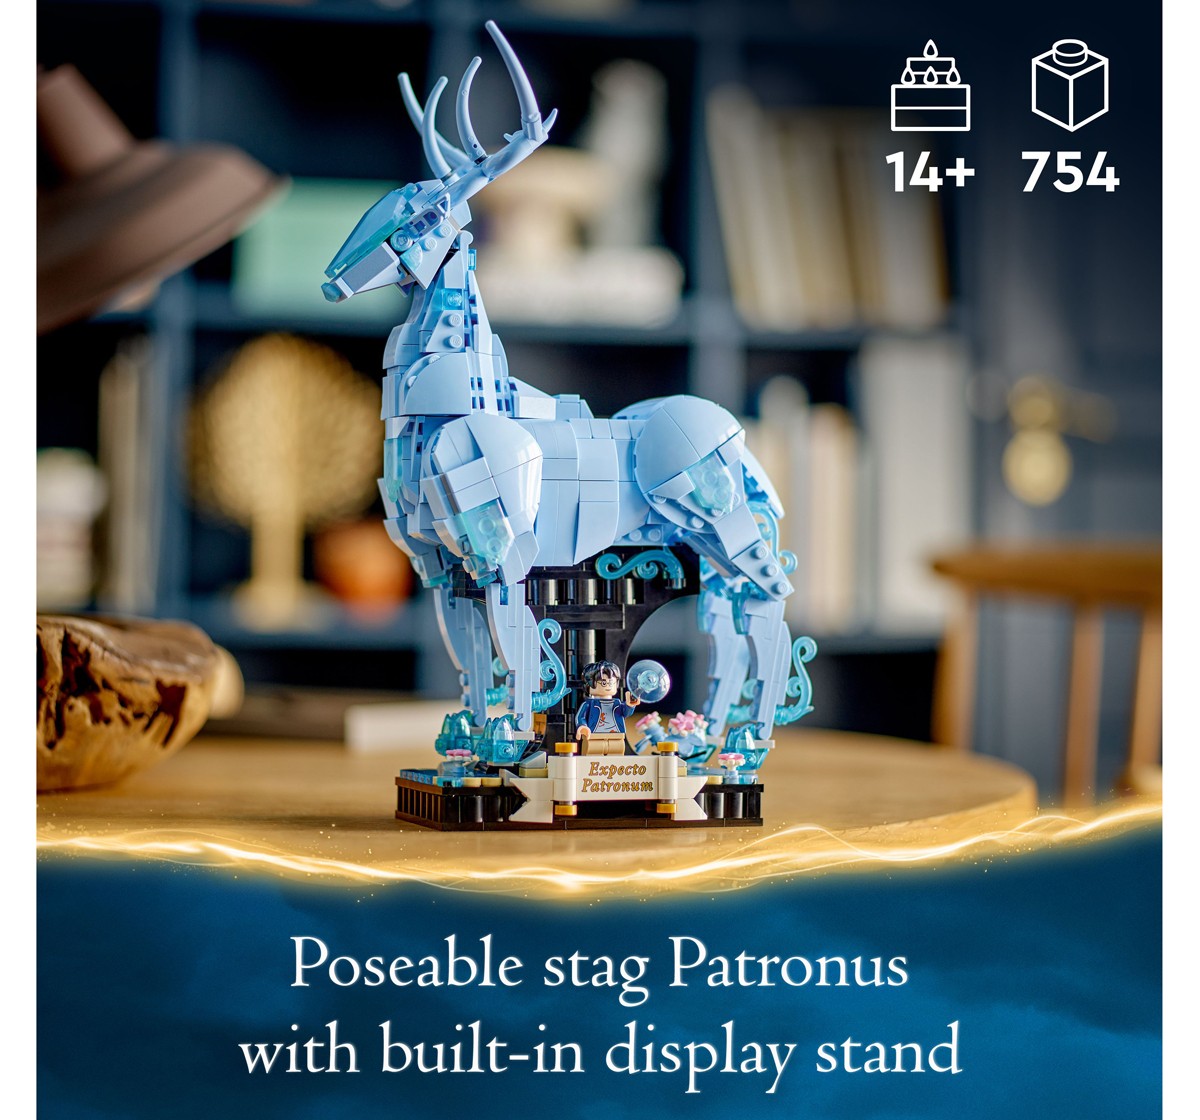 LEGO Harry Potter Expecto Patronum 76414 Building Toy Set (754 Pieces), 14Y+